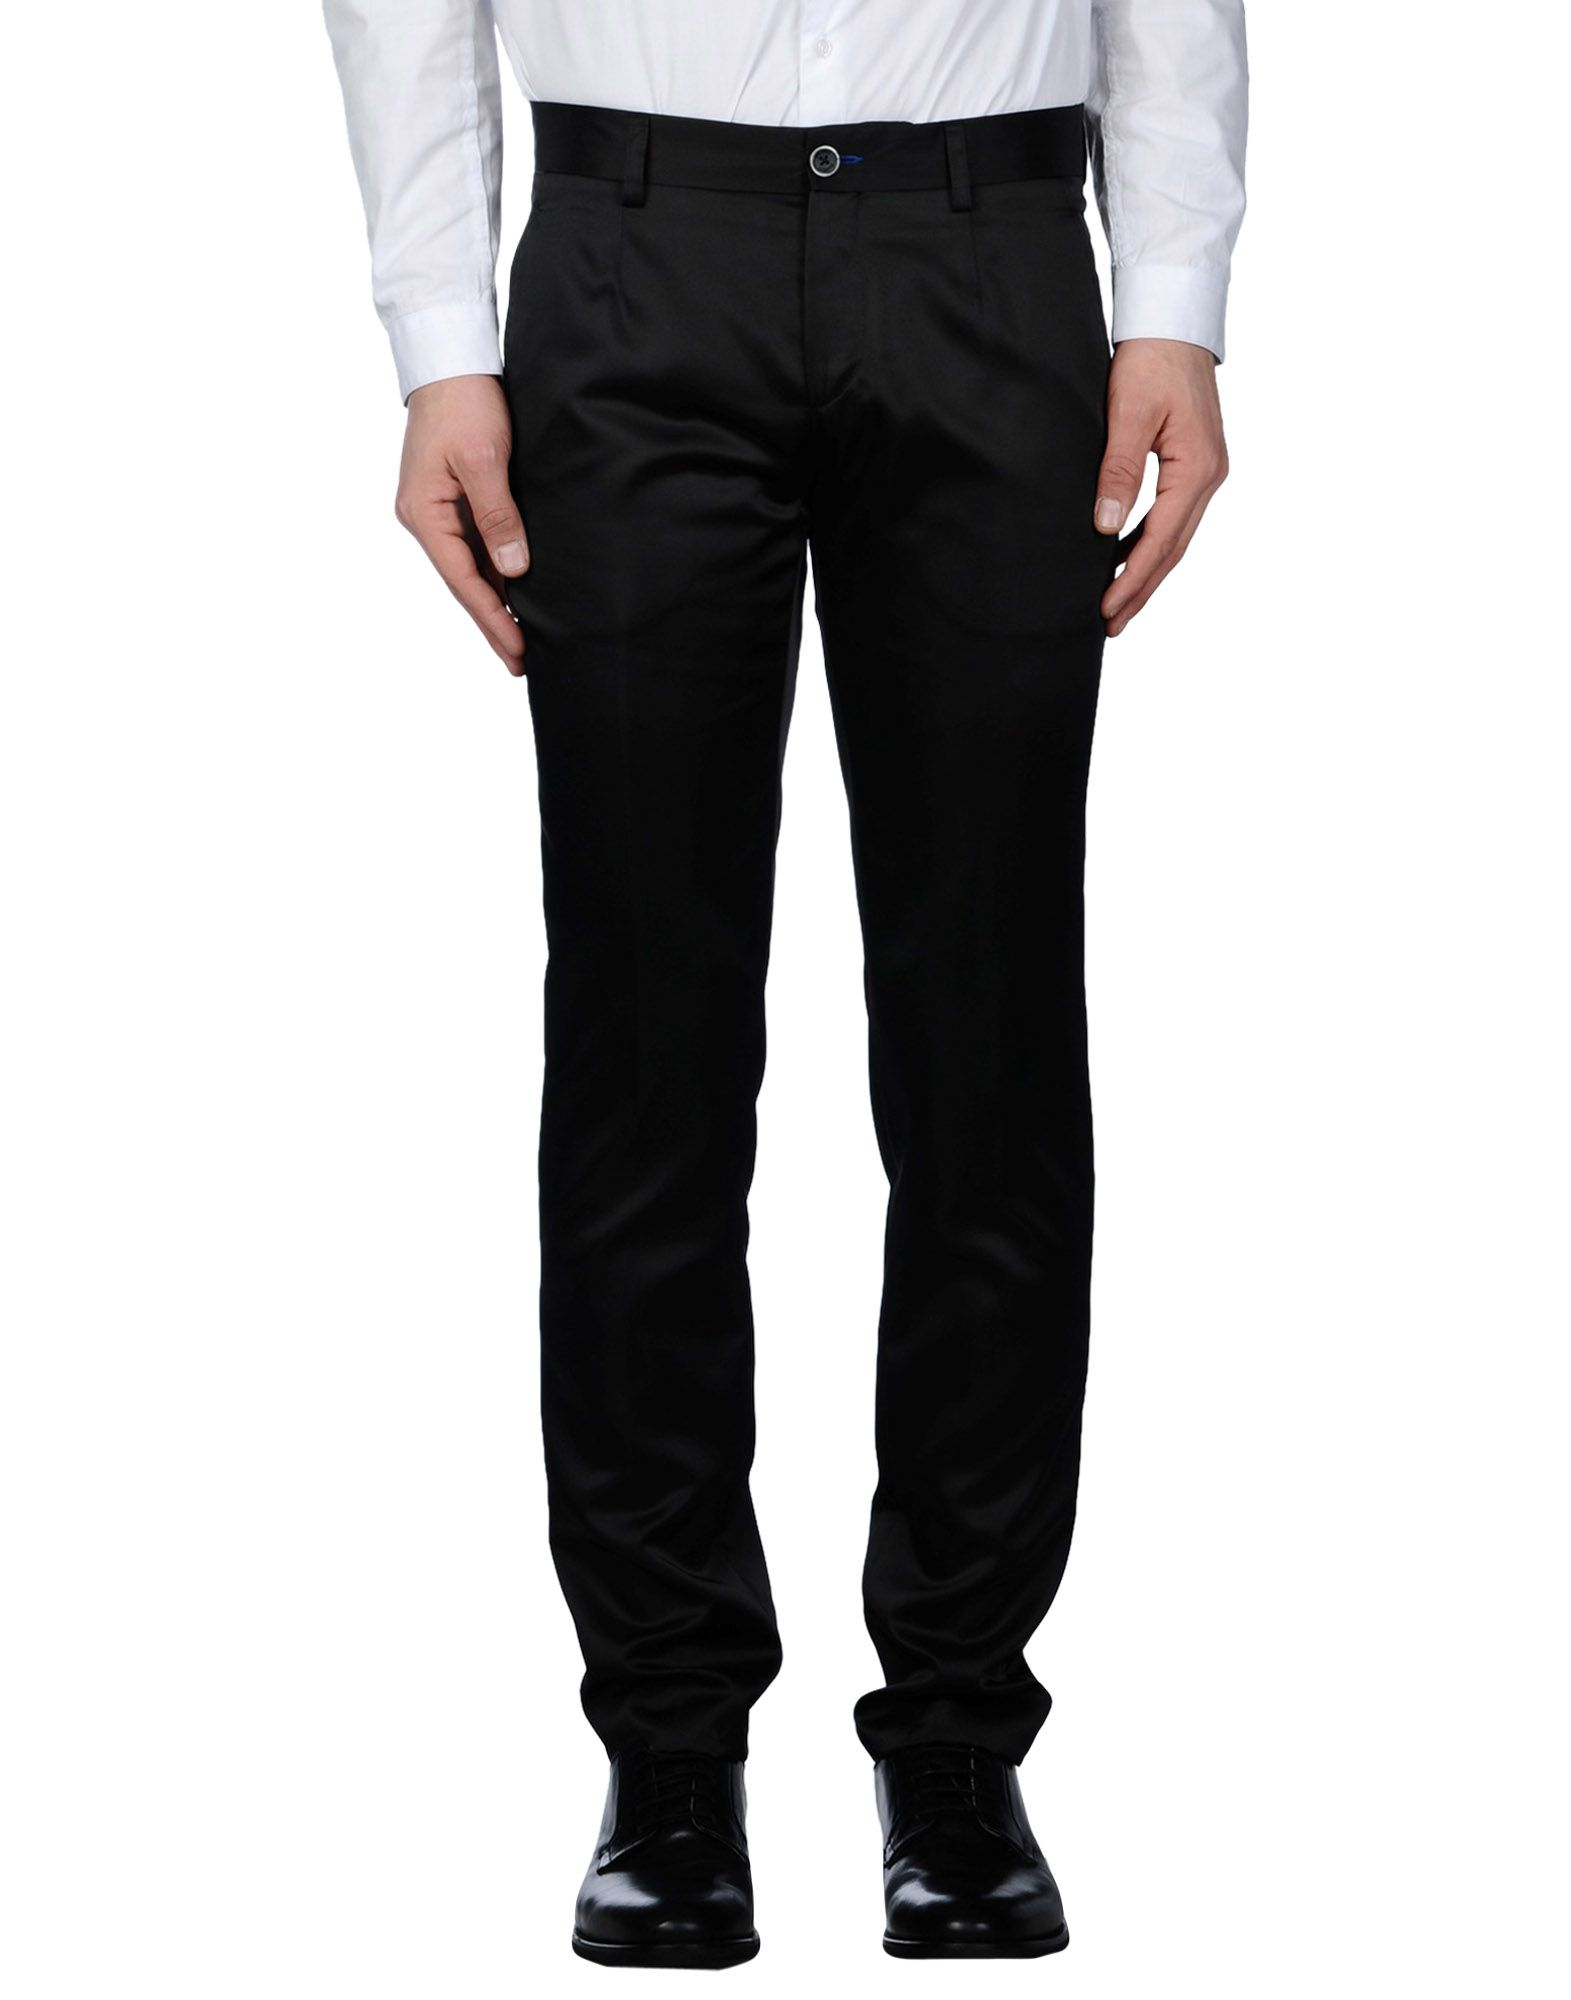 Bikkembergs Casual Trouser in Black for Men - Save 52% | Lyst